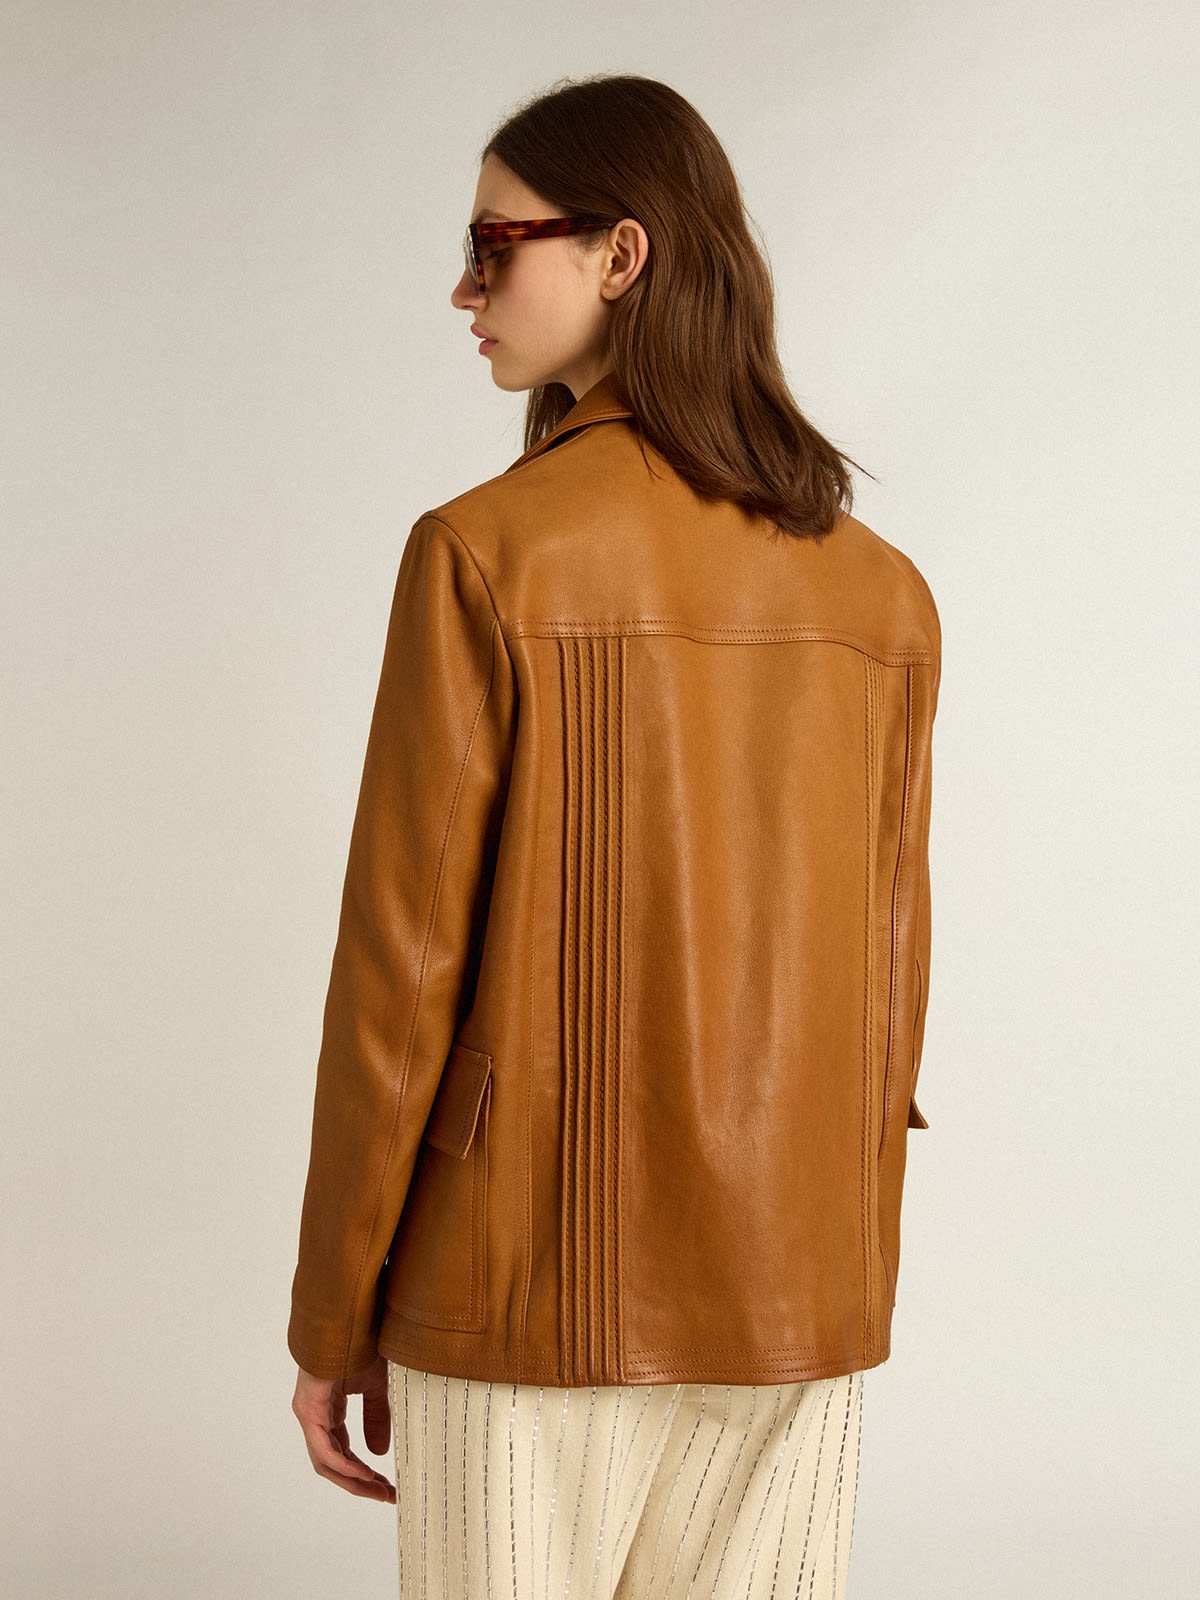 Bronze-brown leather jacket - 4